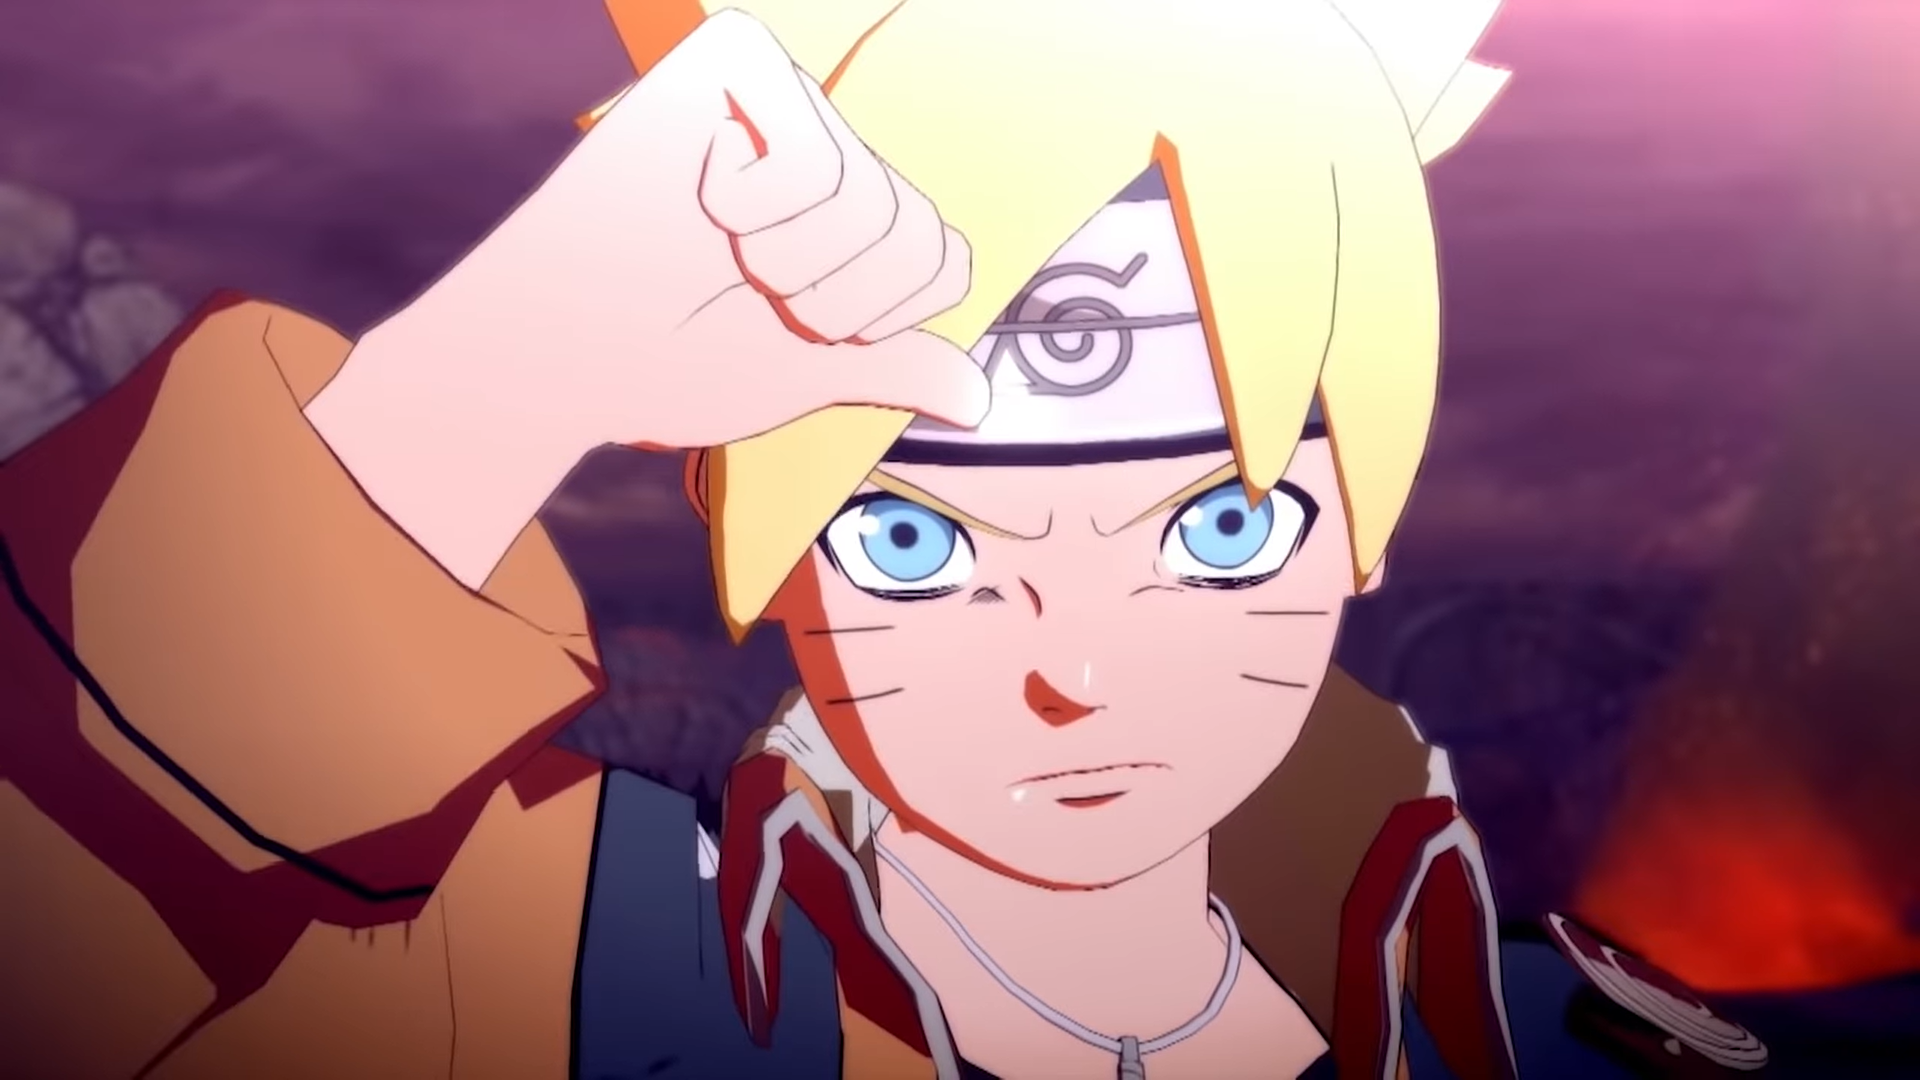 Naruto Shippuden: Ultimate Ninja Storm 4 Road to Boruto Announced For PS4  In Japan - Siliconera